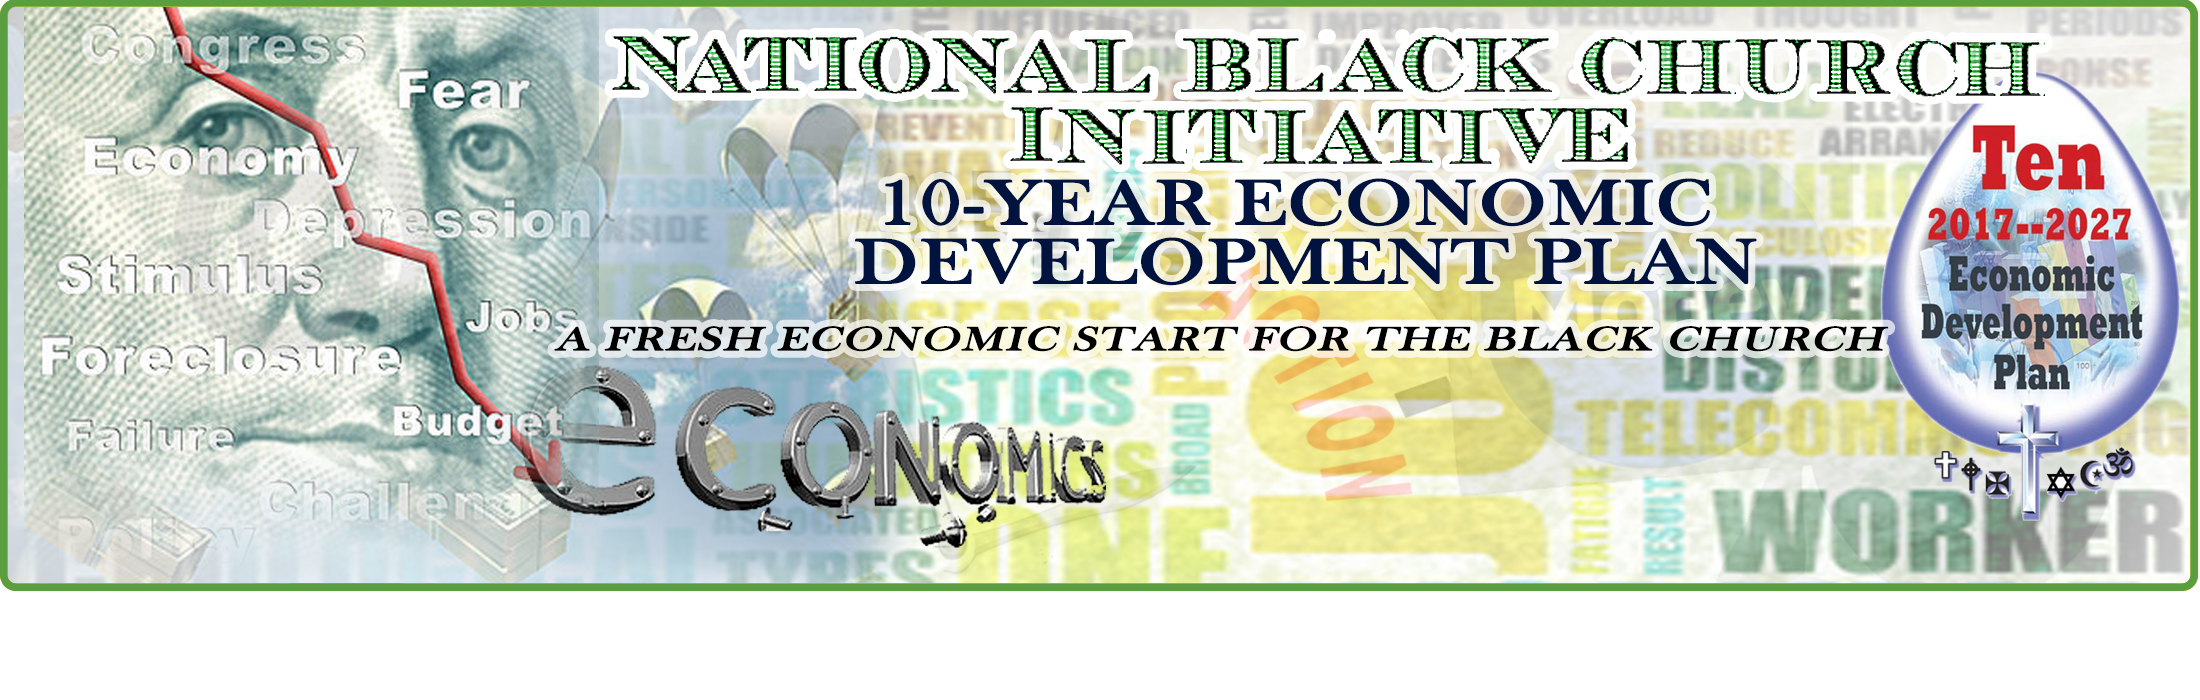 National Black Church 10-Year Economic Development Plan Booklet